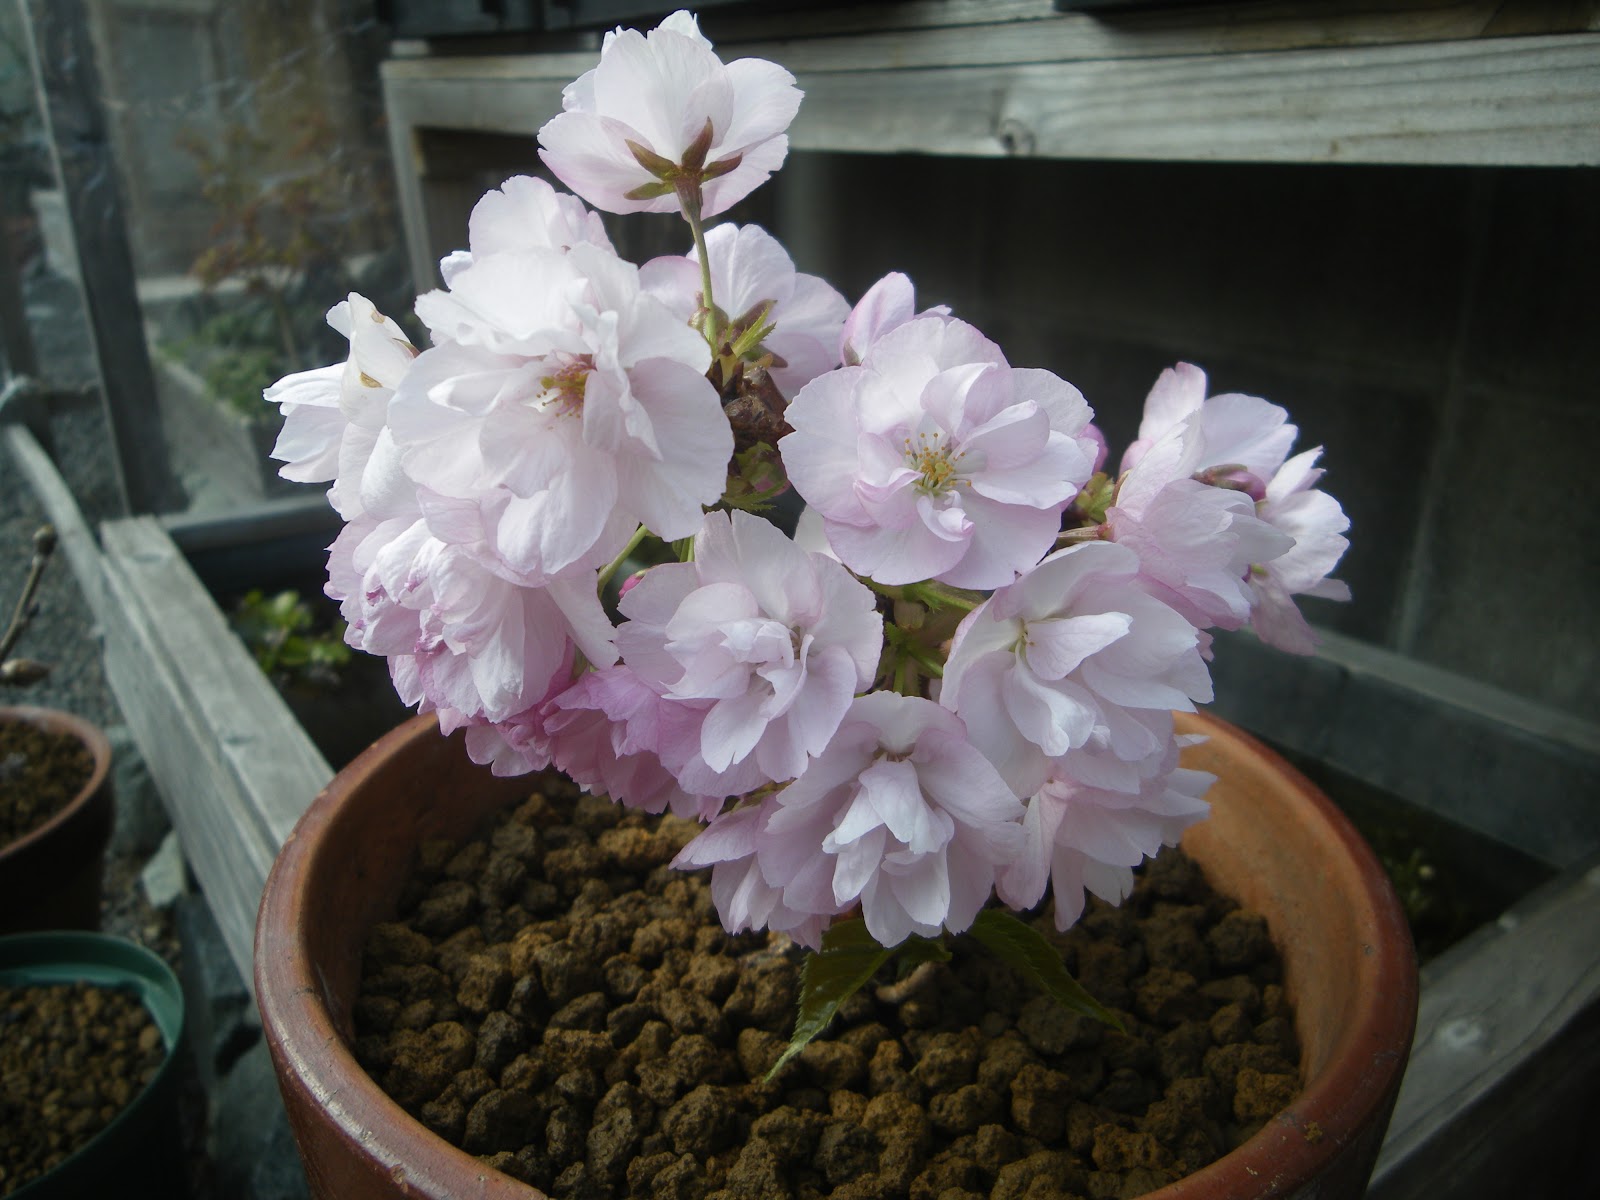 適当な価格 【確認用】桜 鉢植え - 植物/観葉植物 - www.lifeinsp.com